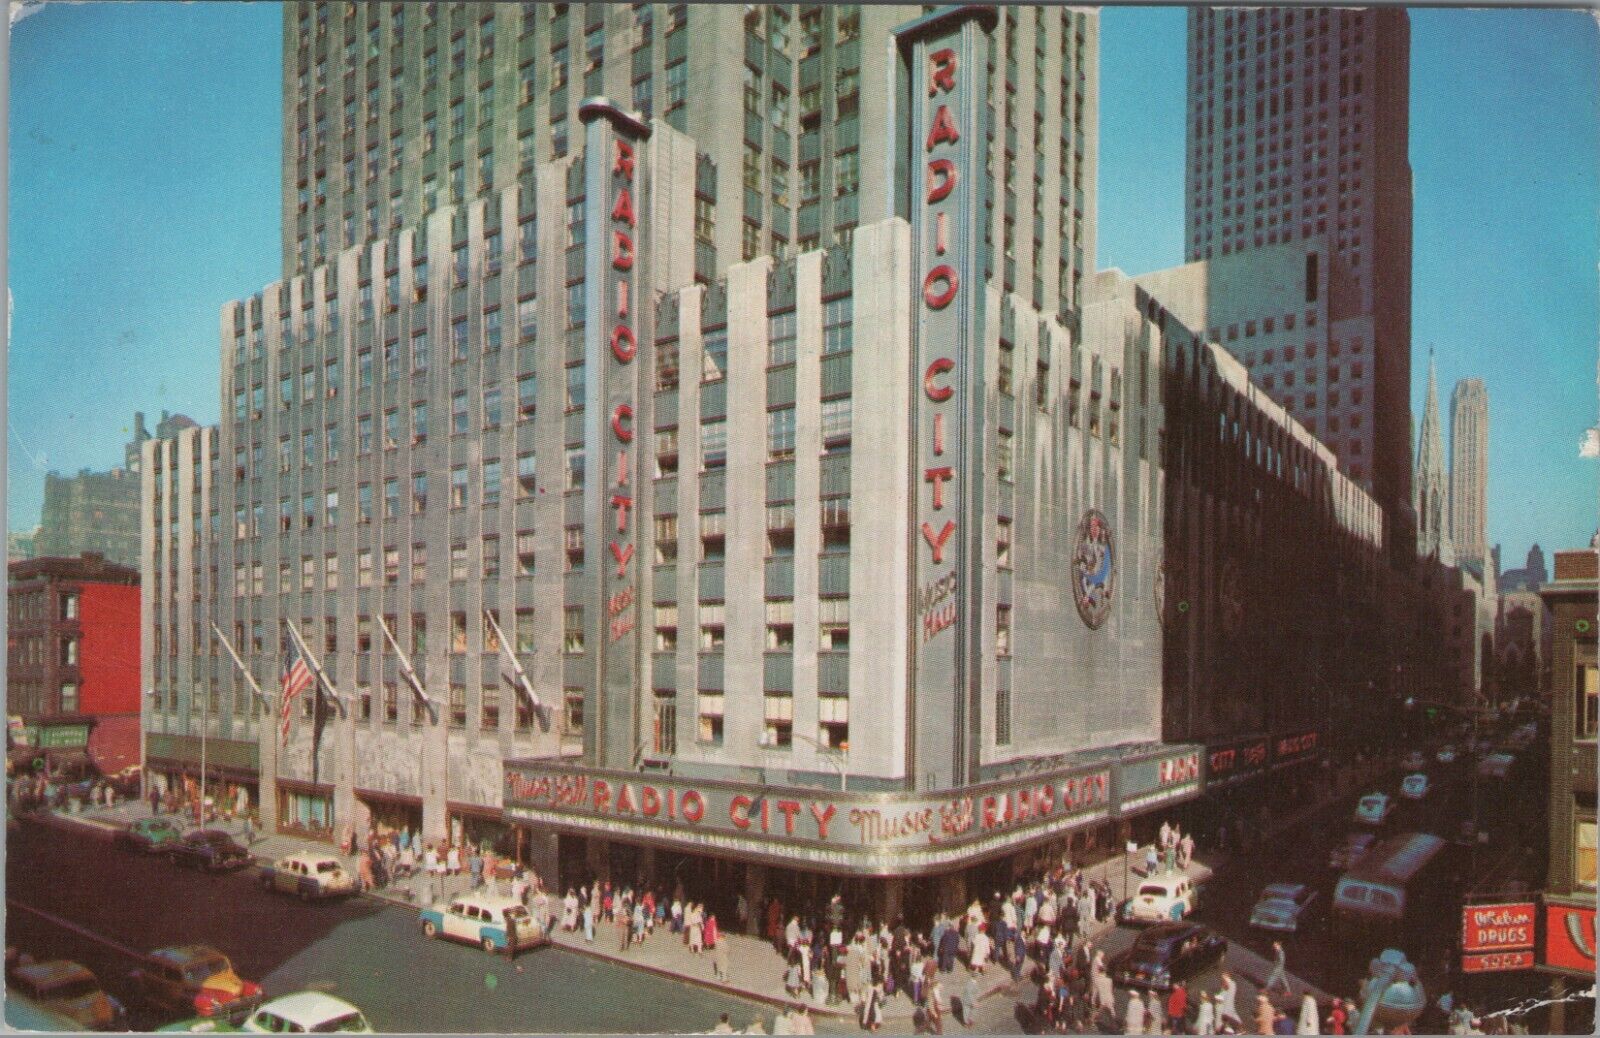 c1960 Radio City Music Hall New York City taxis autos crowds postcard C582